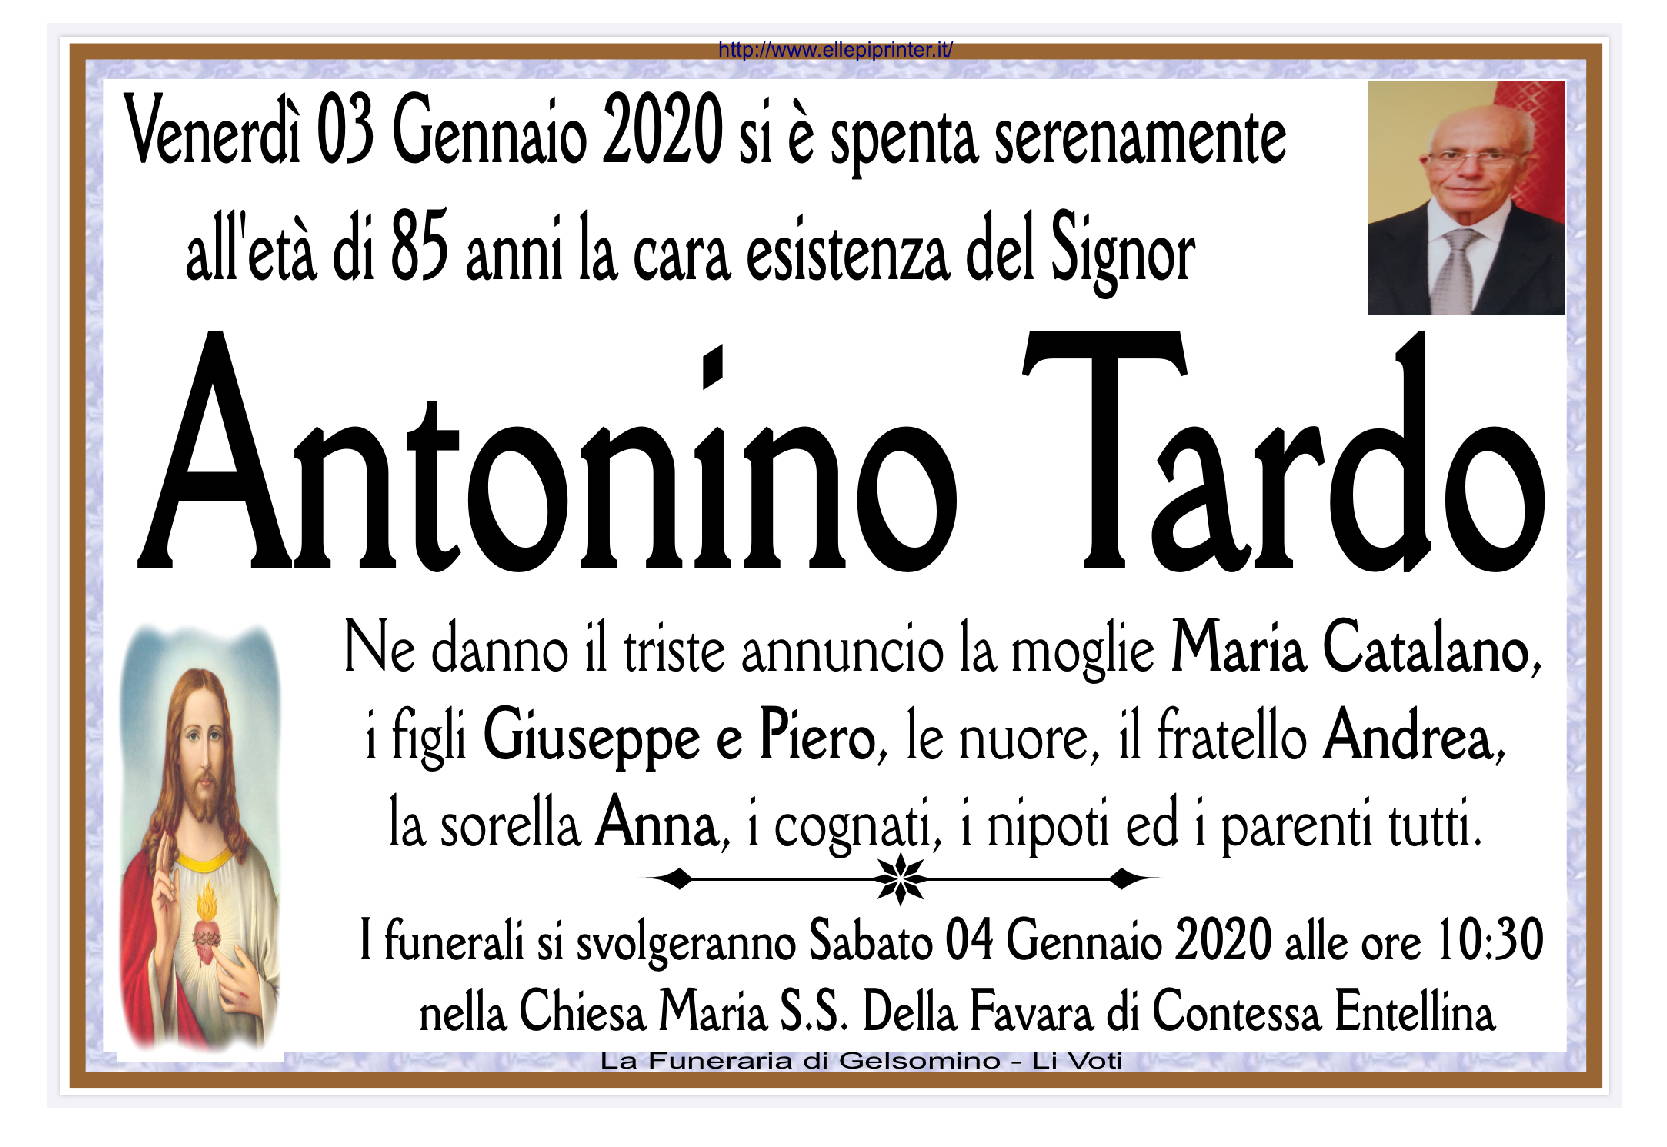 Antonino Tardo